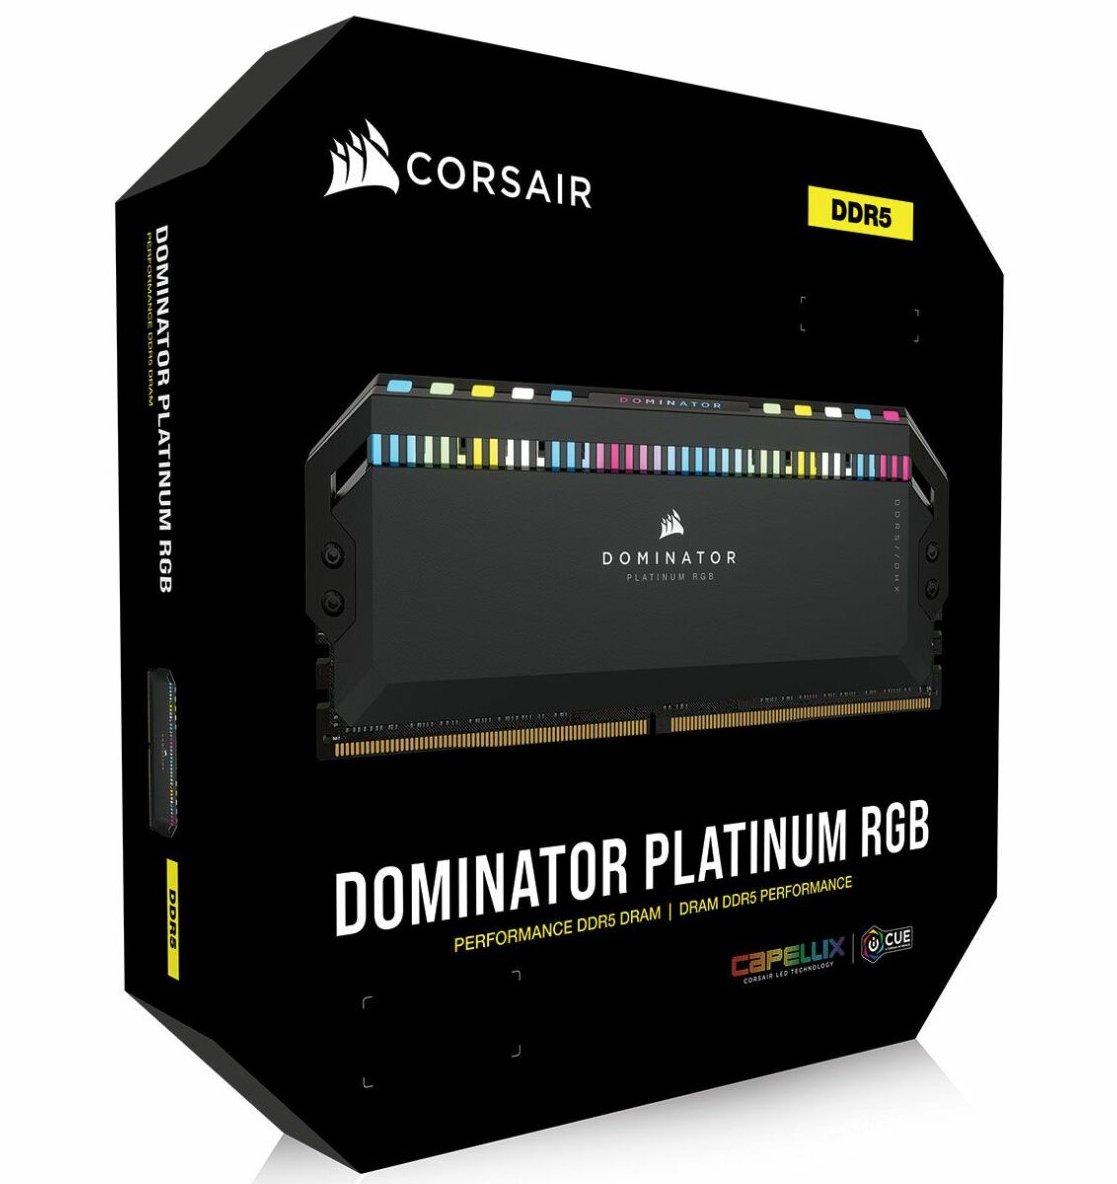 Corsair-DDR5-Dominator-Platinum-RGB-Memory-Kits-Package-1480x1480